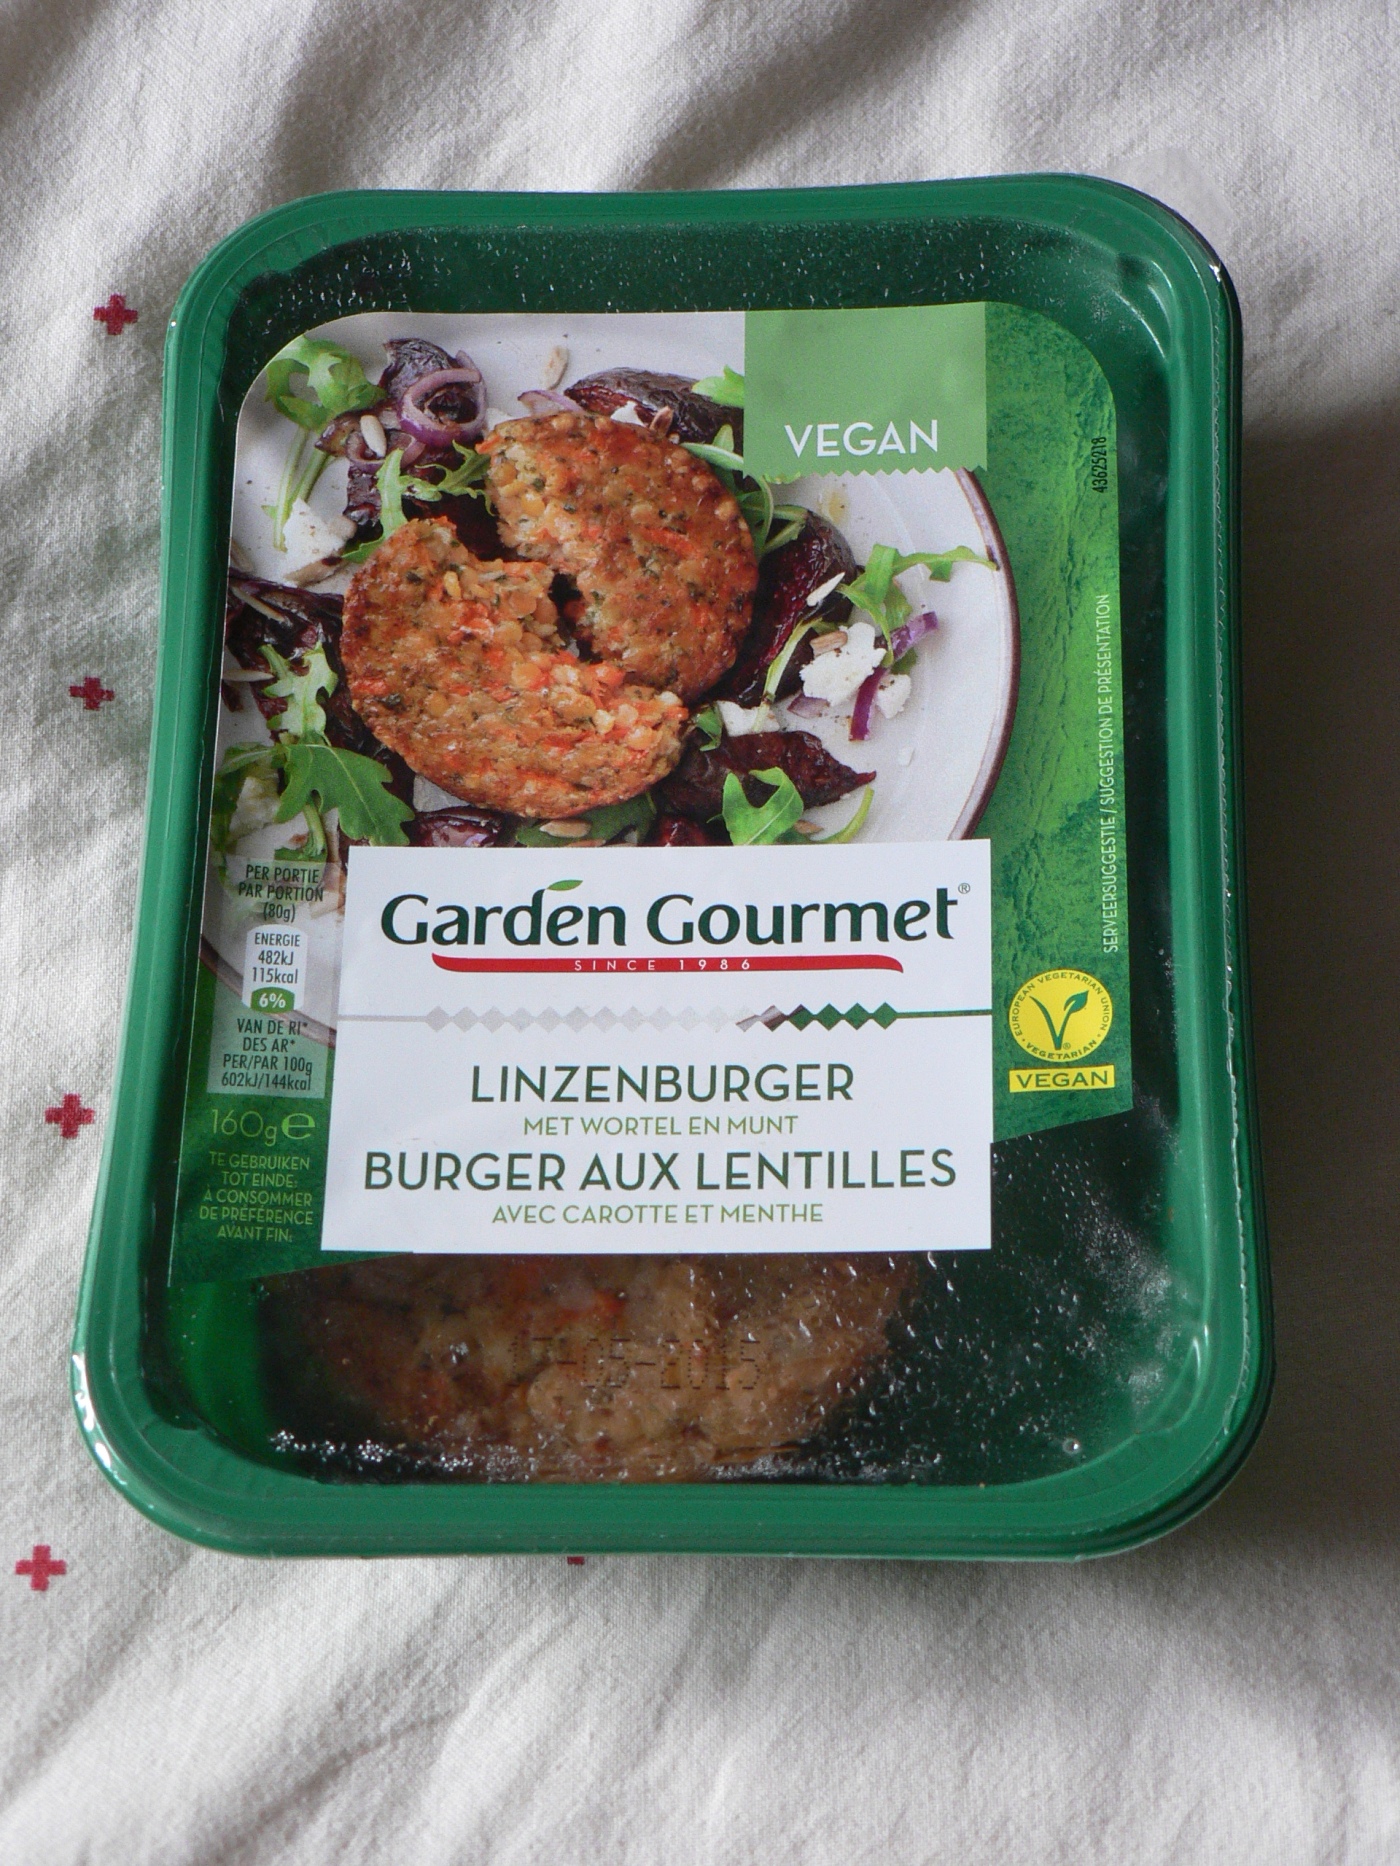 Garden Gourmet Lentil Burger Vegan Stuff In Belgium